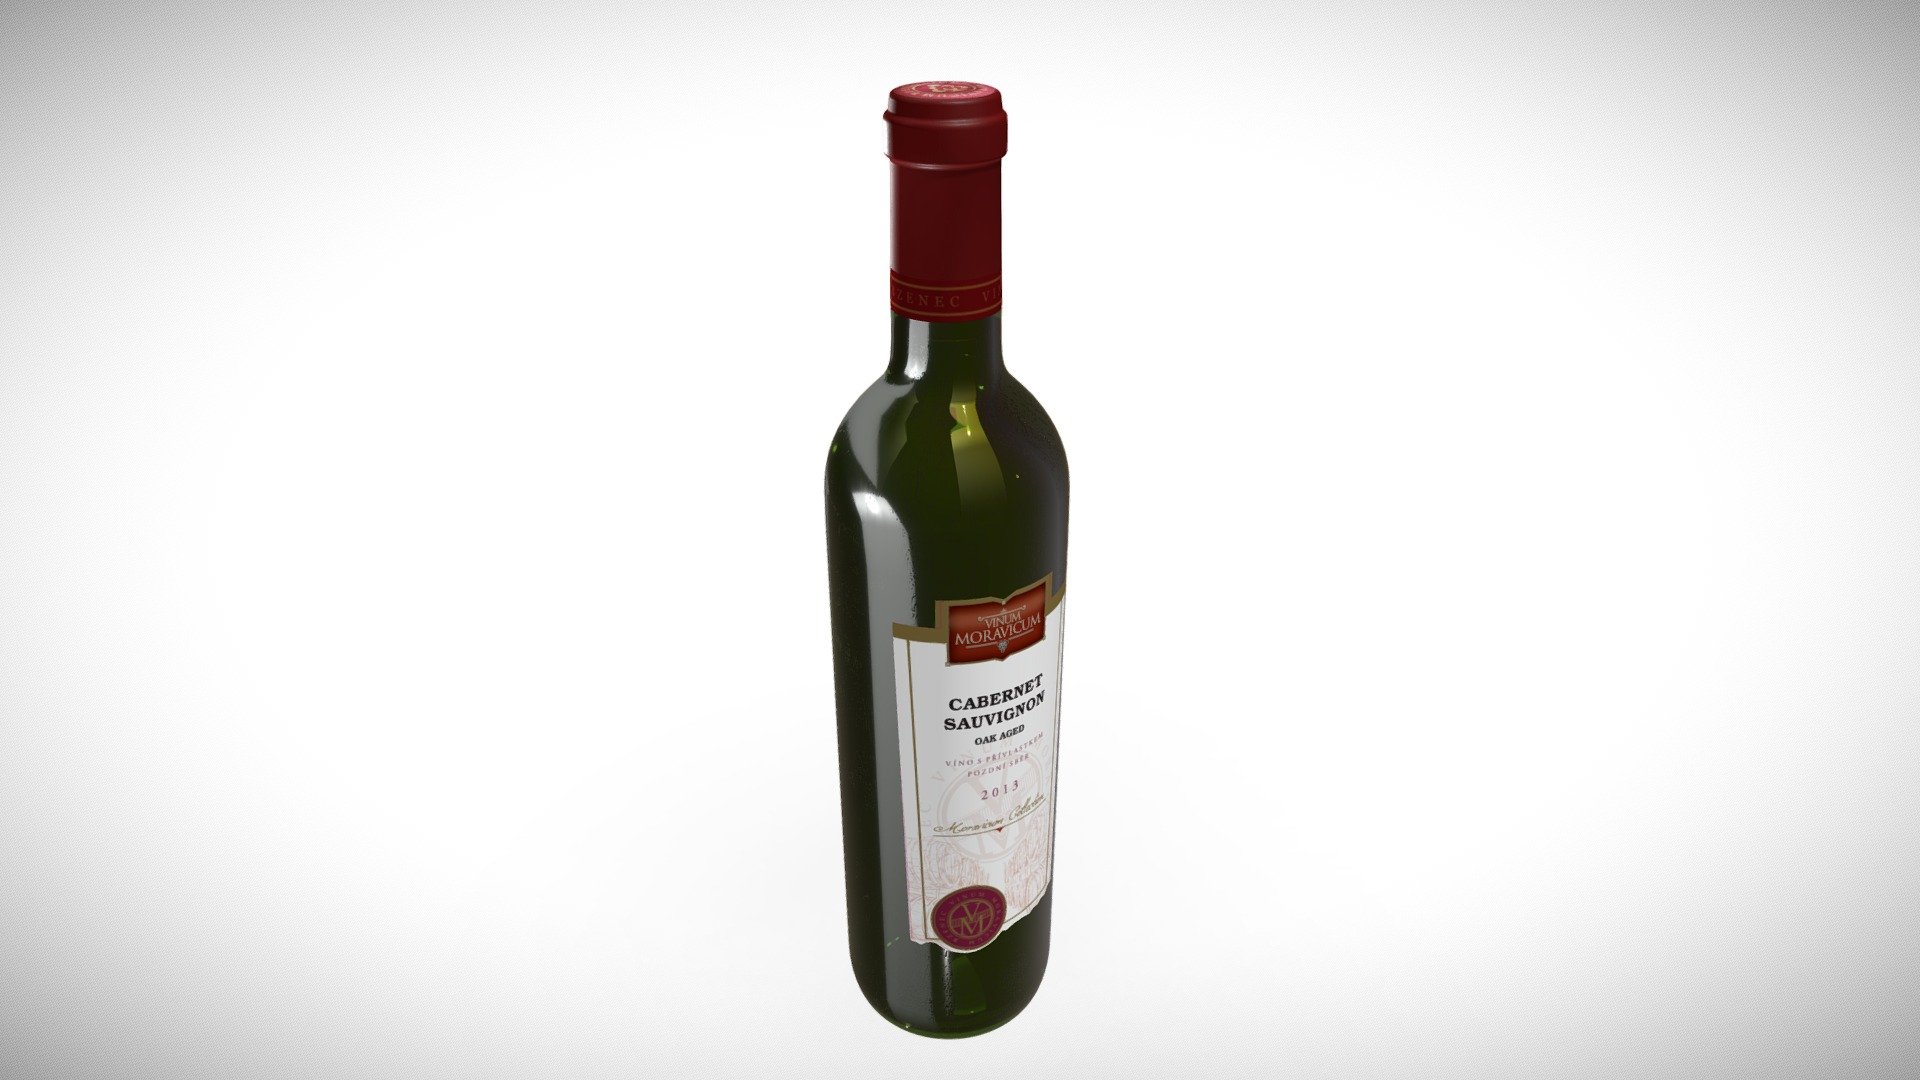 Bottle of Wine Cabernet Sauvignon Oak aged